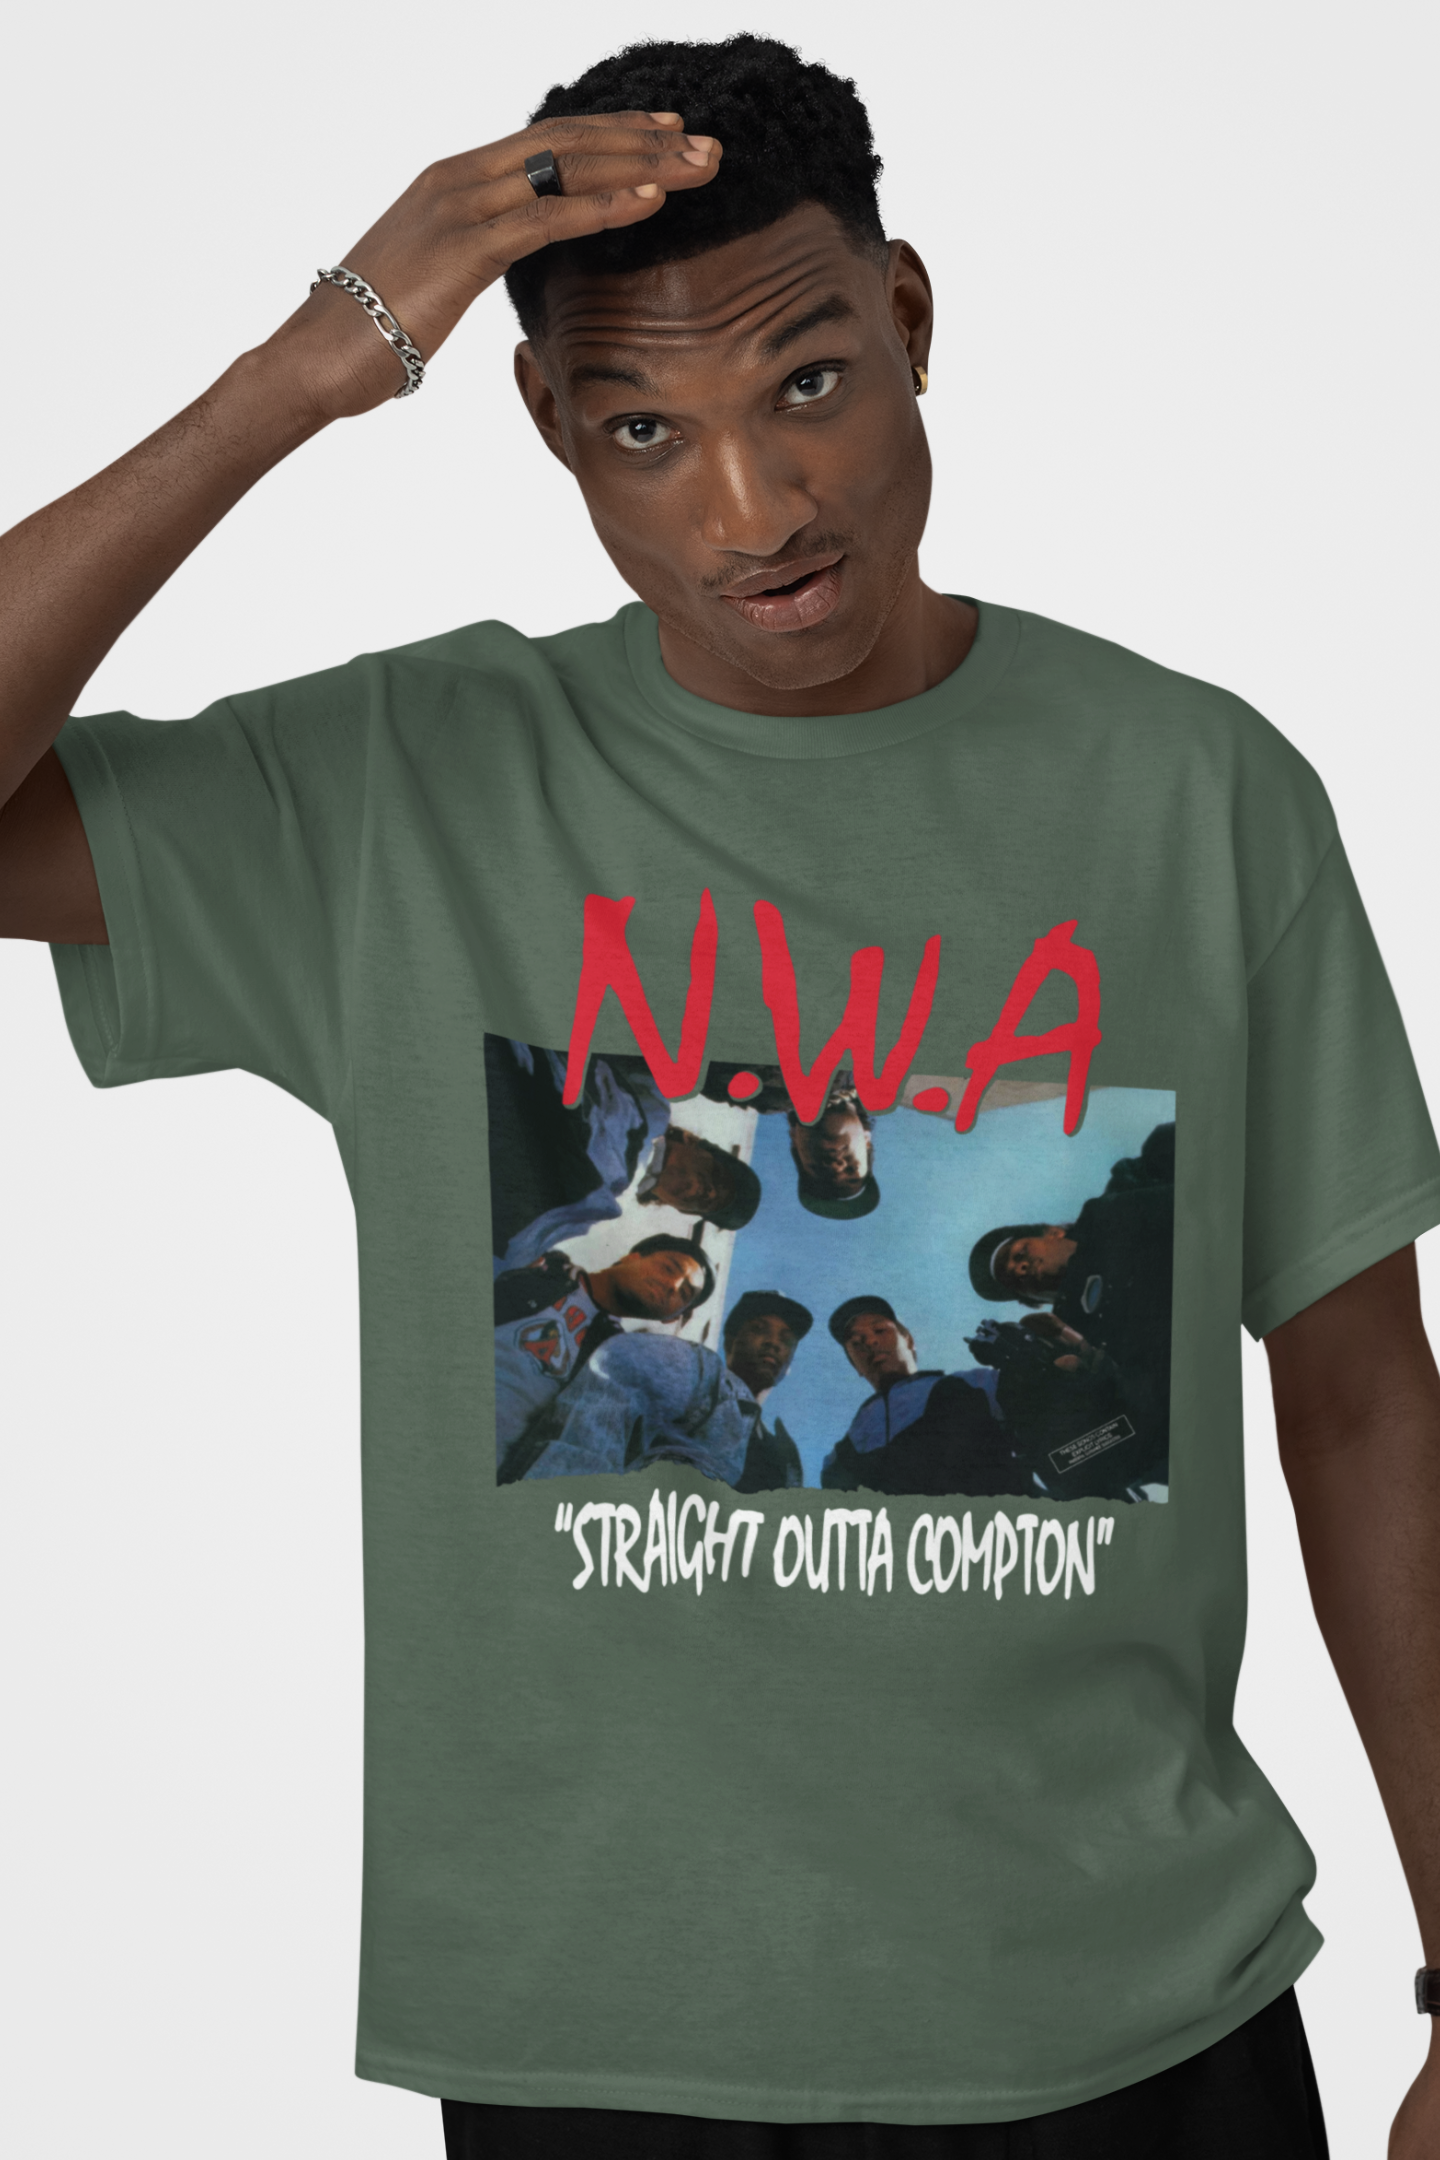 NWA Iconic Straight Outta Compton T Shirt | NWA T Shirt | 90's Hip Hop | Hip Hop T Shirt | Rap T Shirt | NWA Album